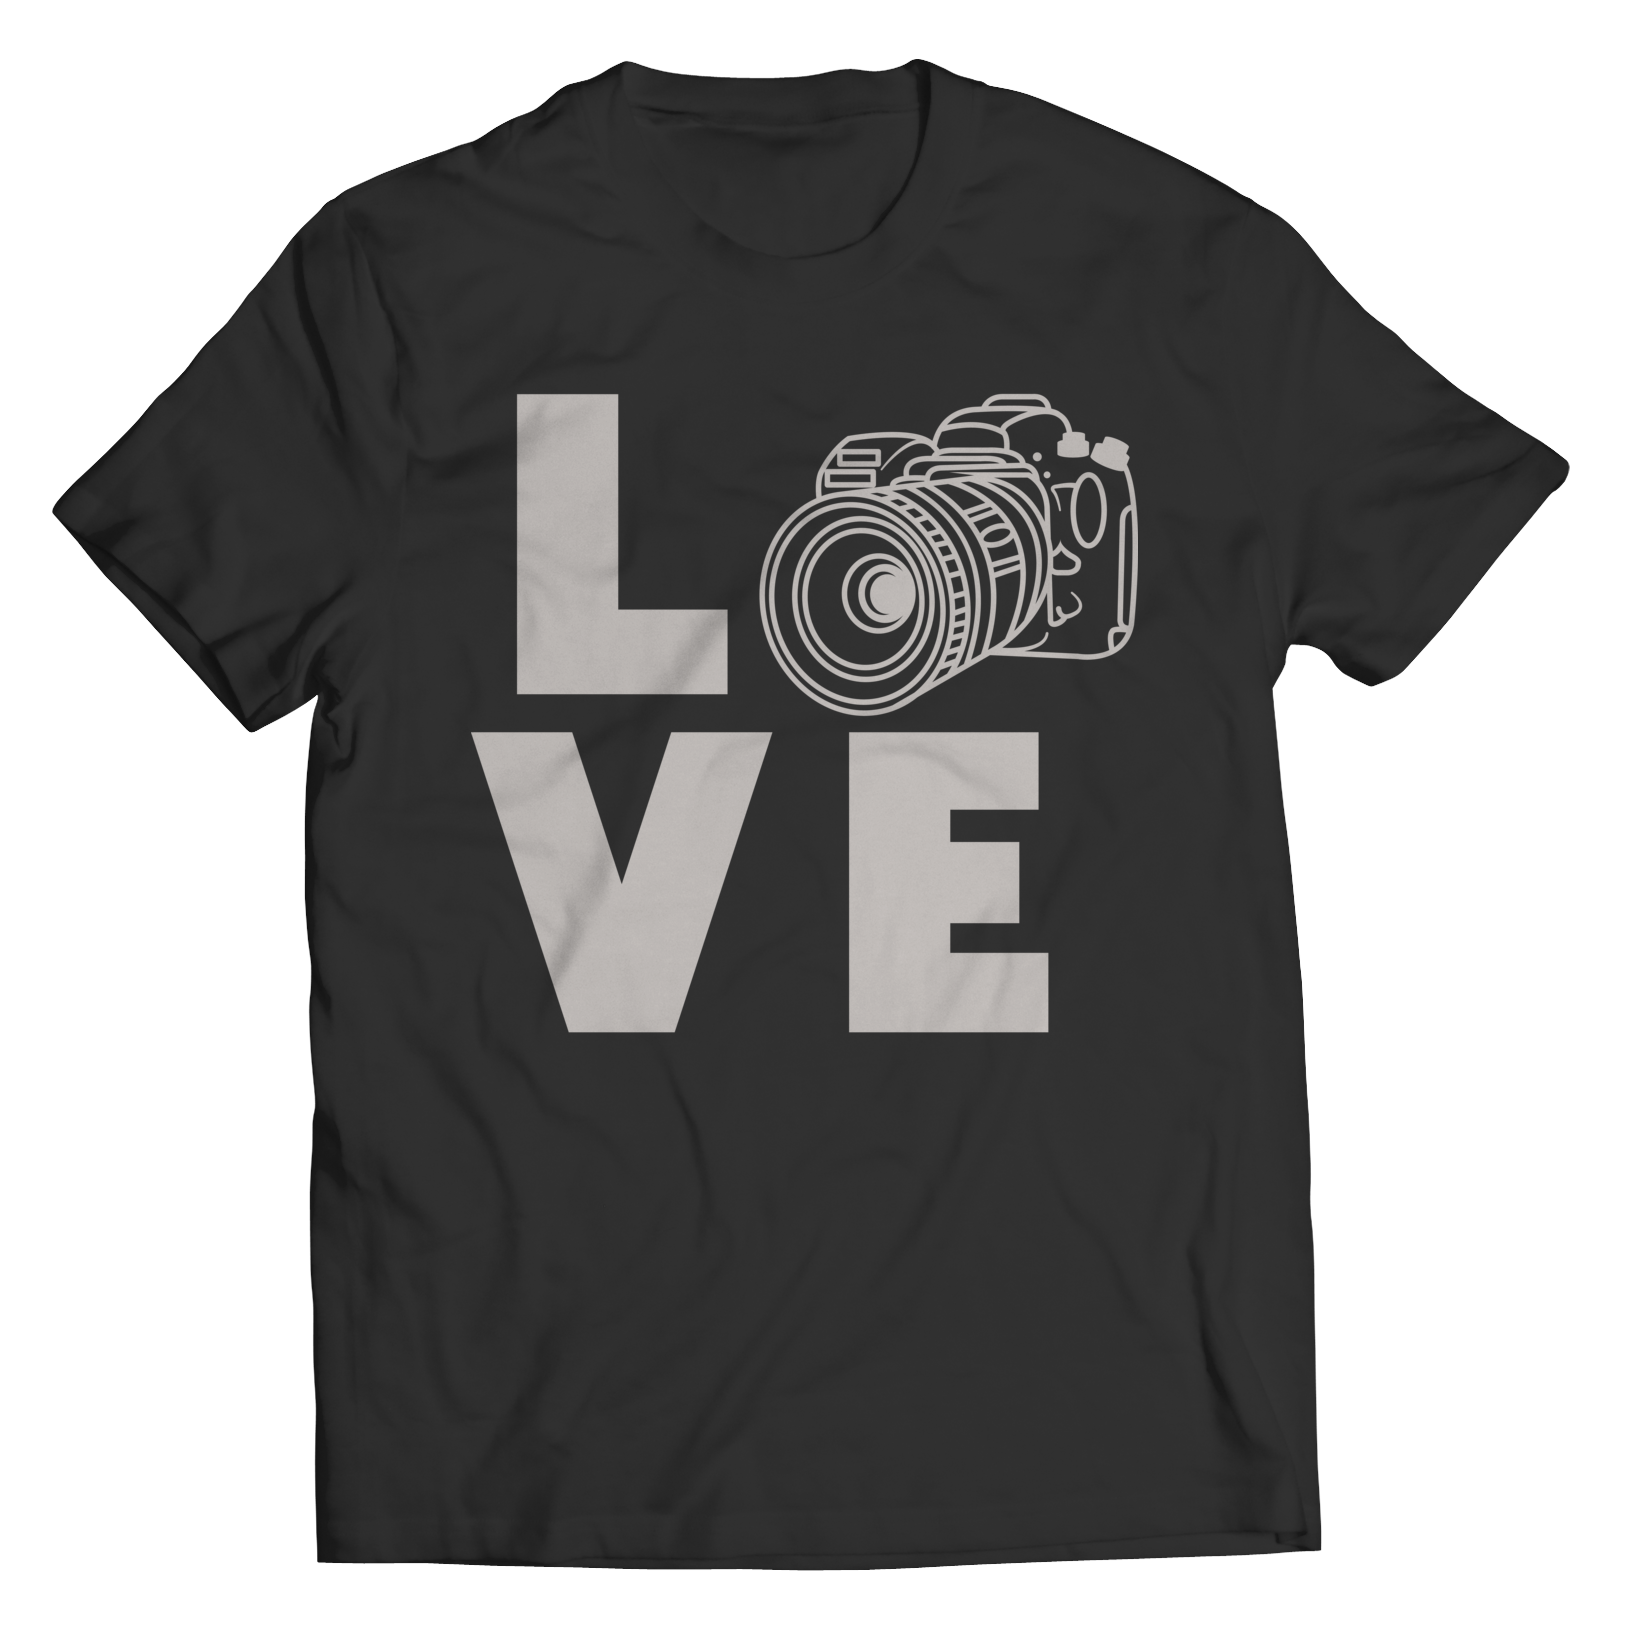 Camera Love Shirt